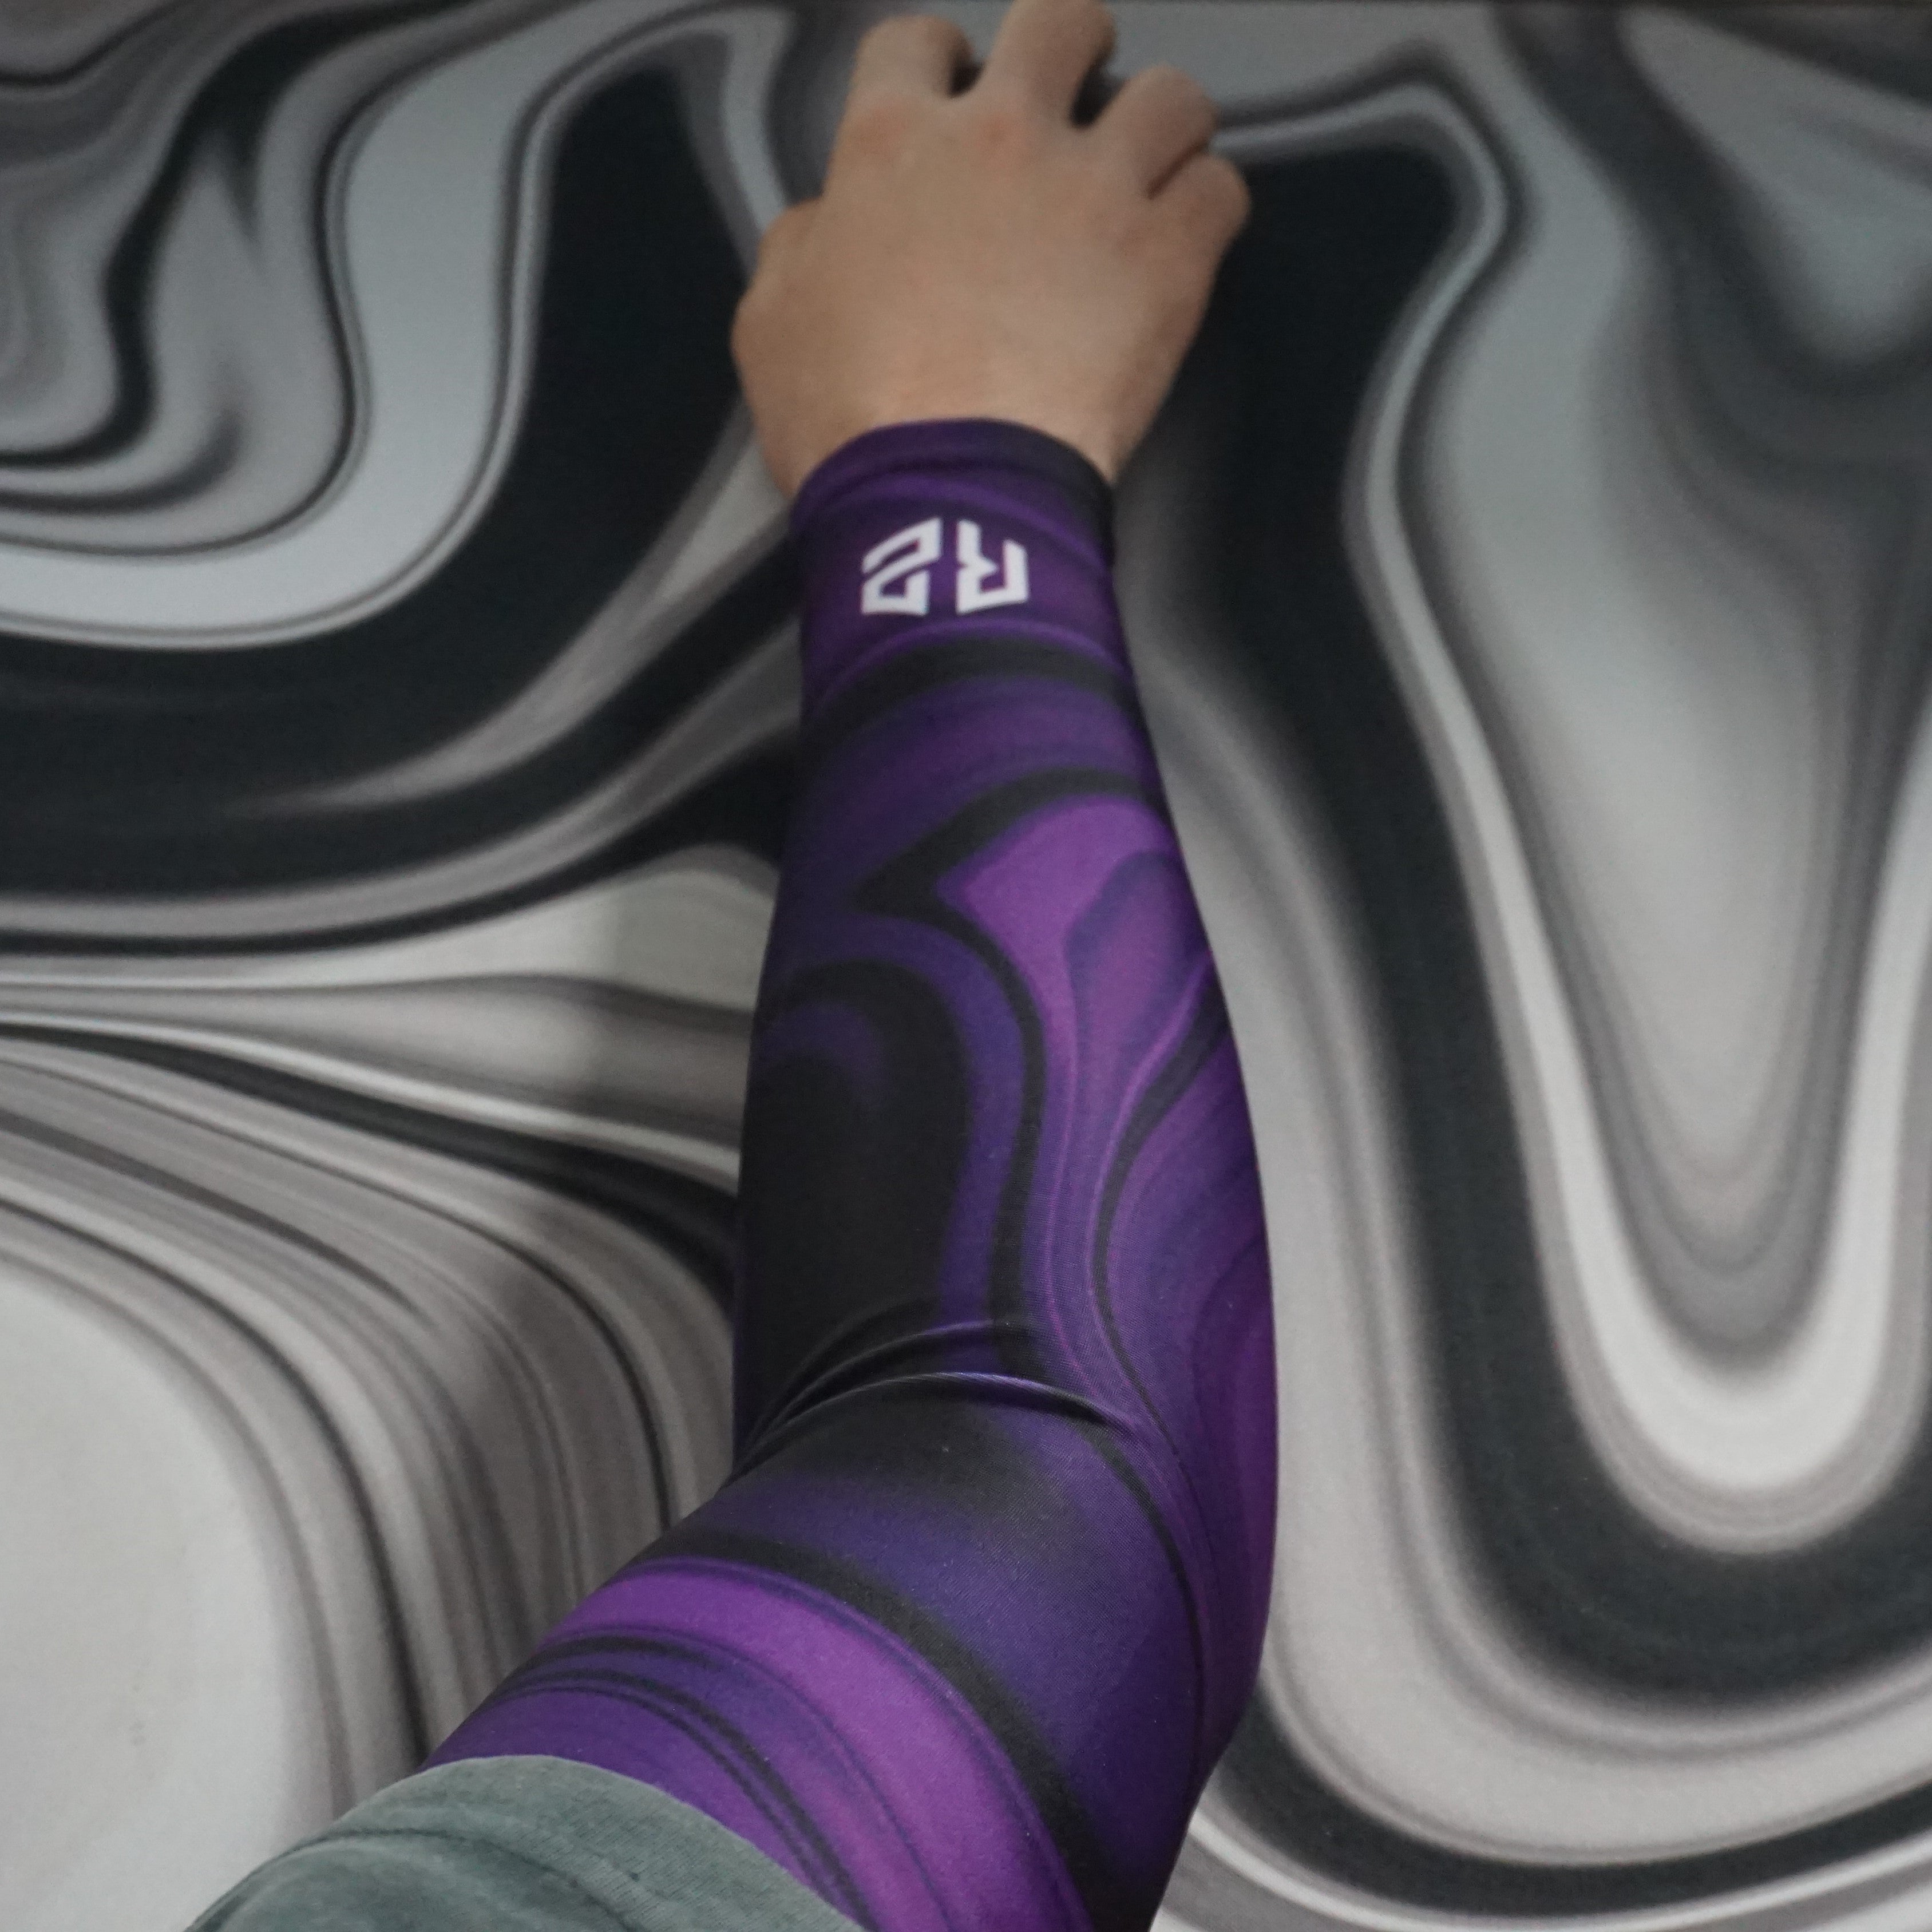 RZ Arm Sleeve - Liquid Purple Edition